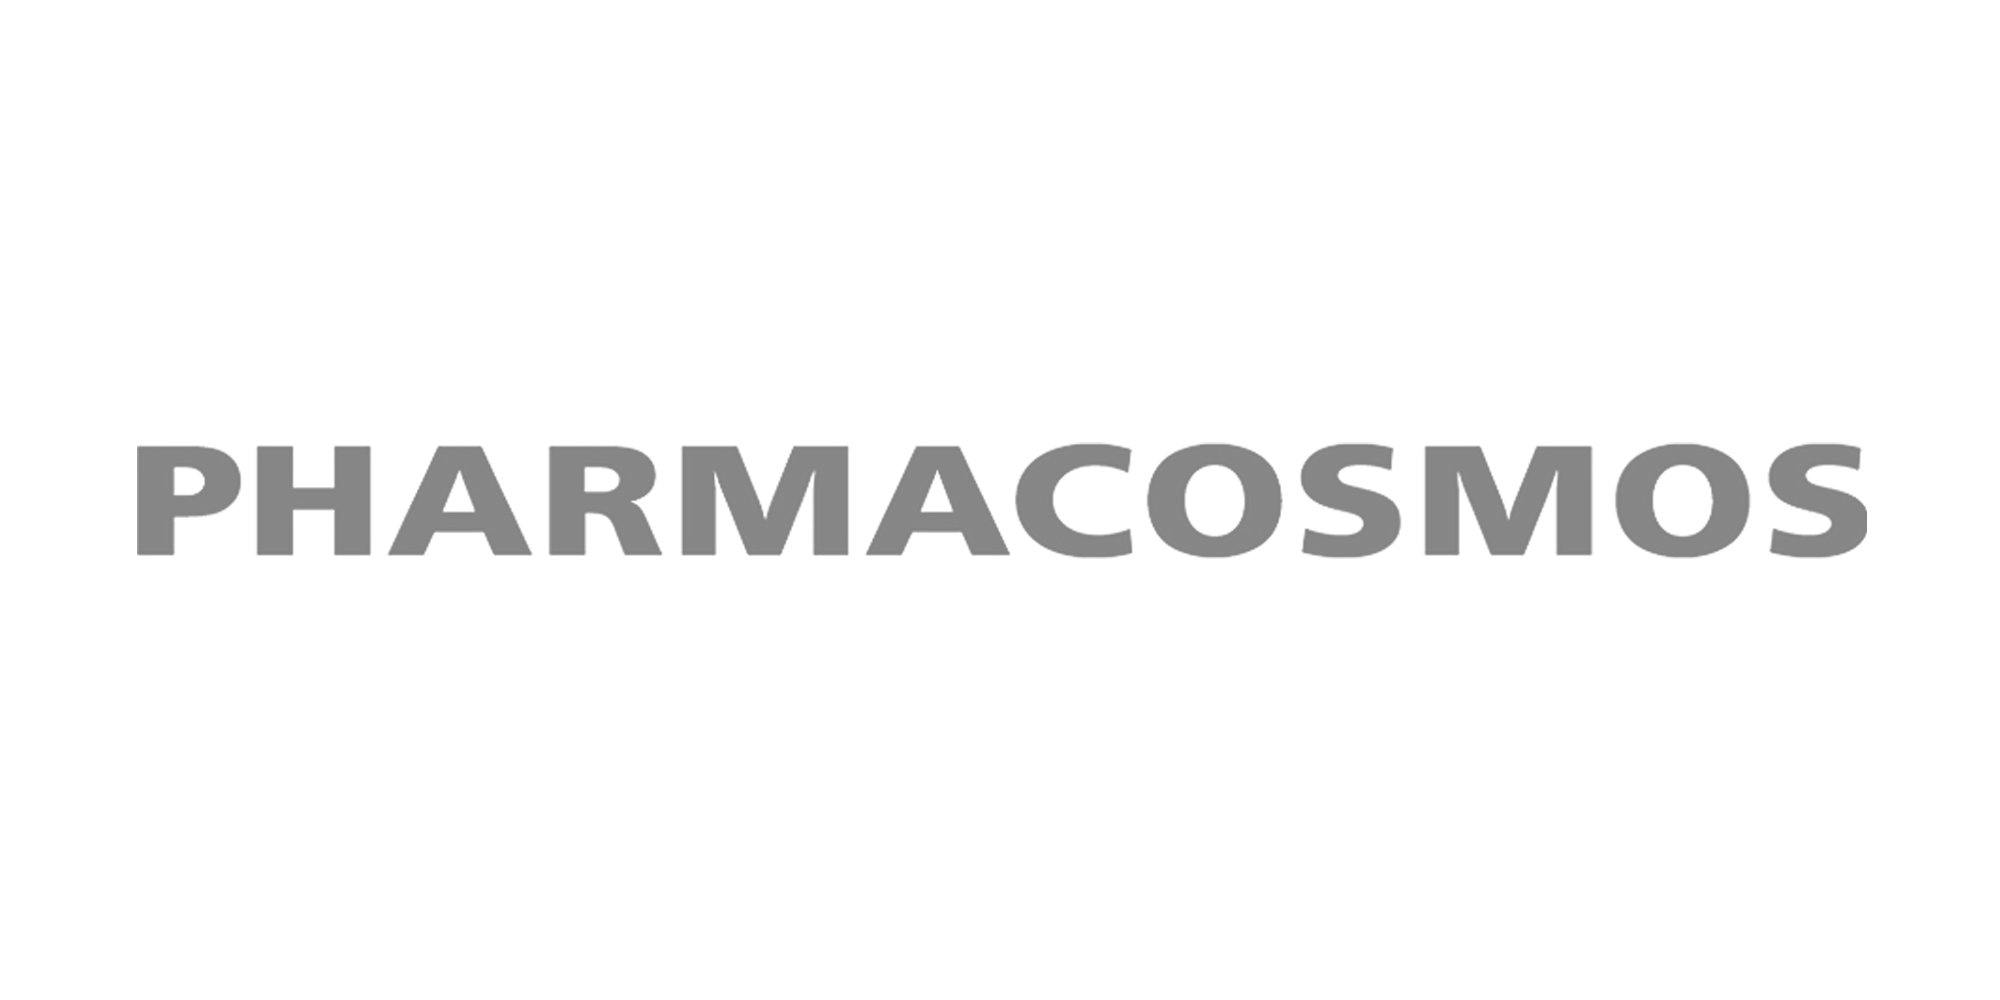 Pharmacosmos logo